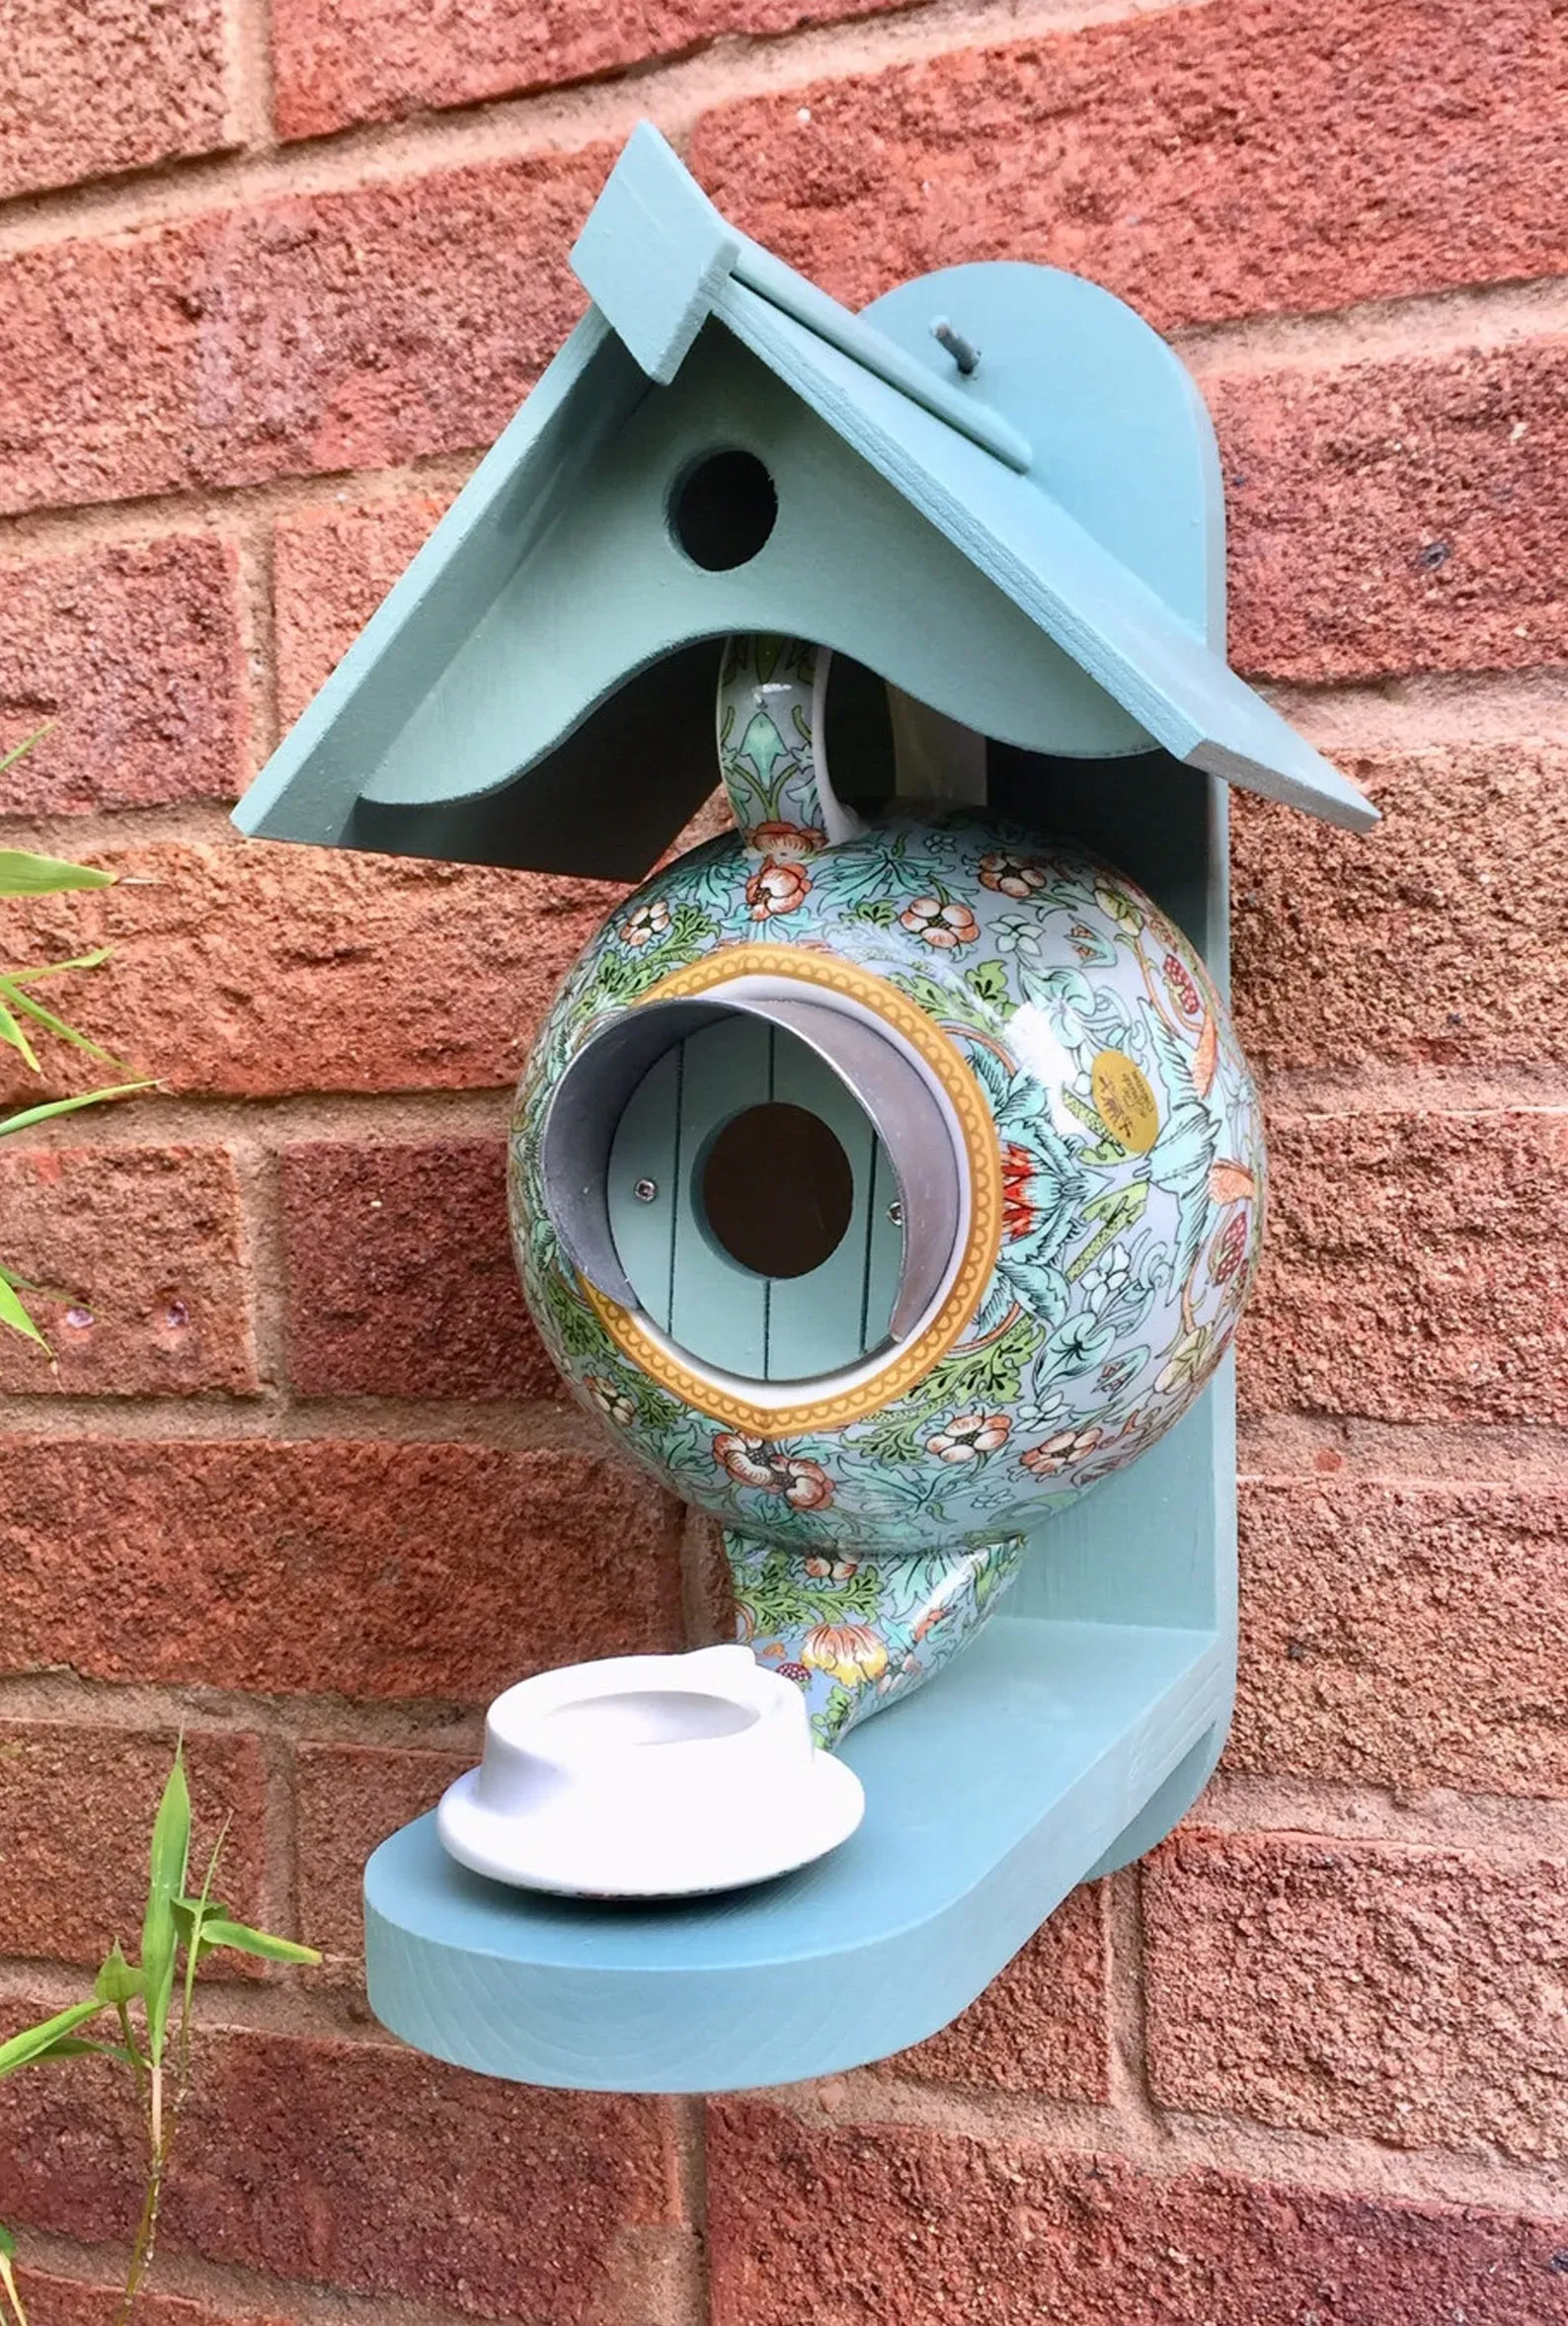 🐦Teal Teapot Bird House And Feeder